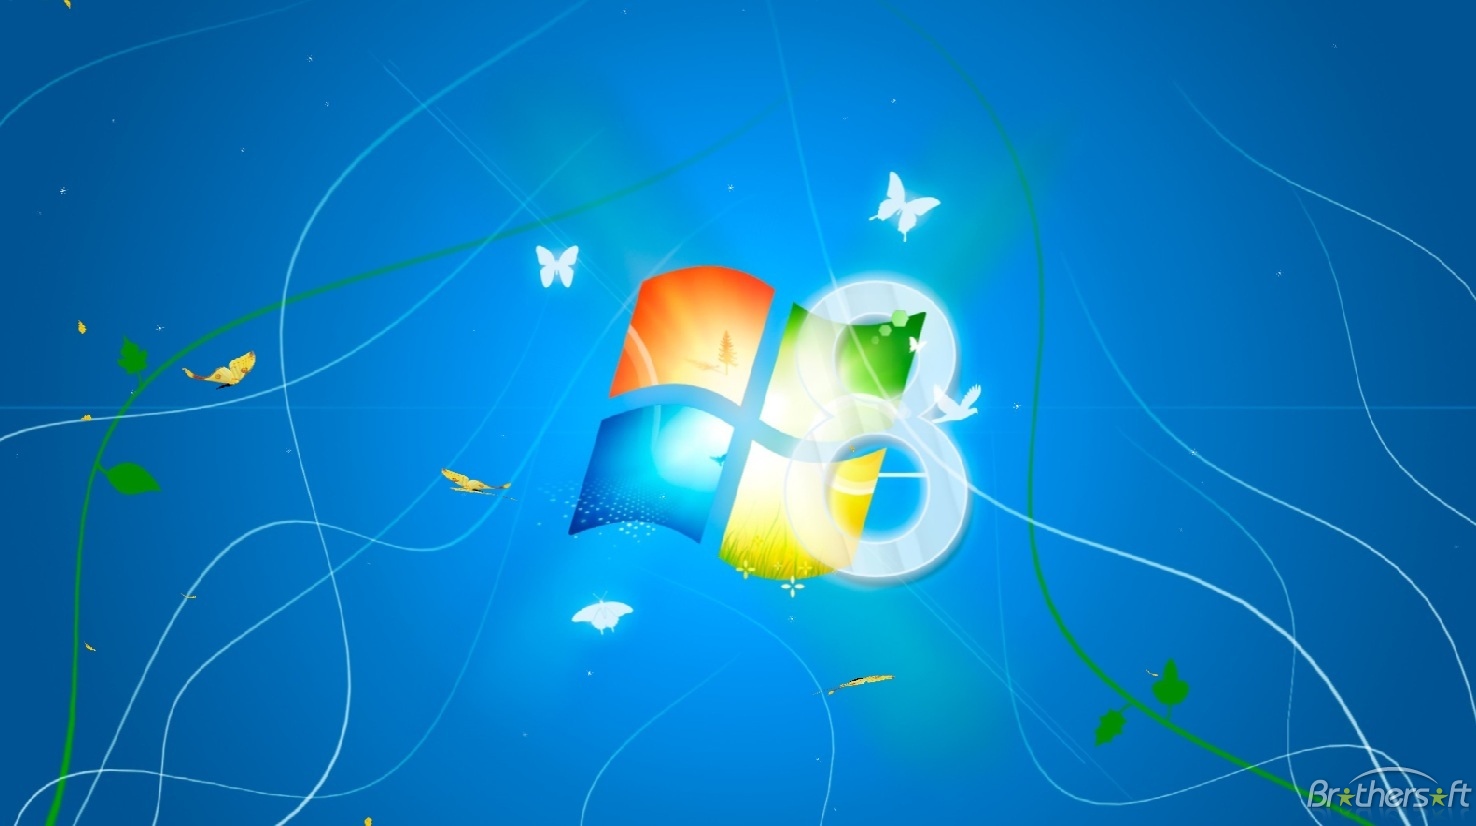  Windows 8 Light Animated Wallpaper Windows 8 Light Animated Wallpaper 1476x826